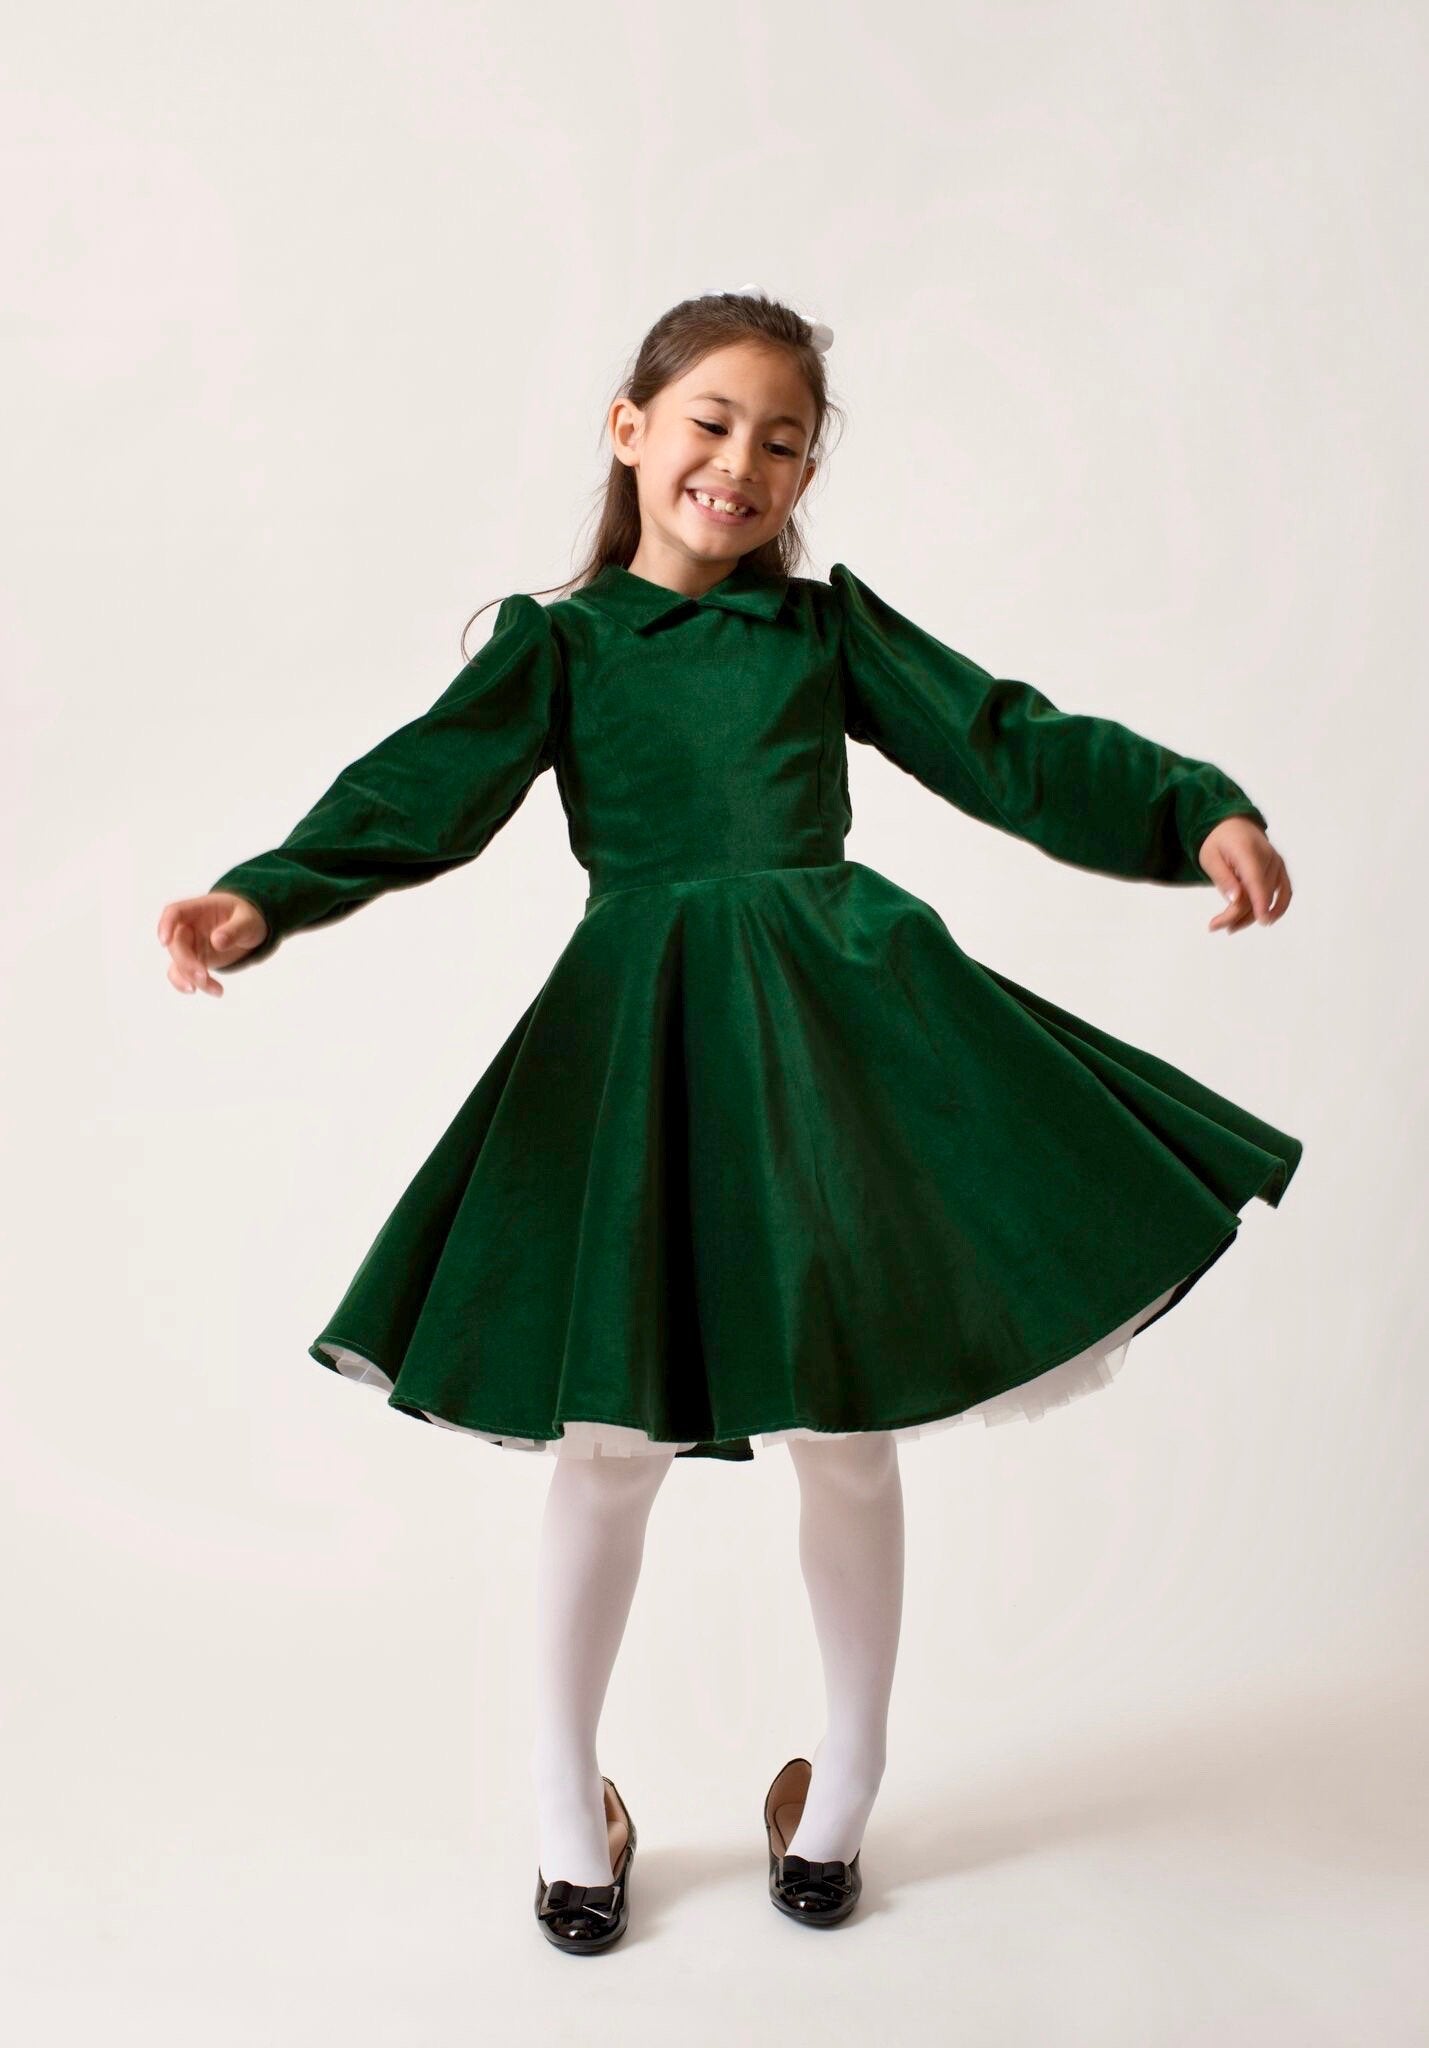 A girl jumping in a green velvet dress.